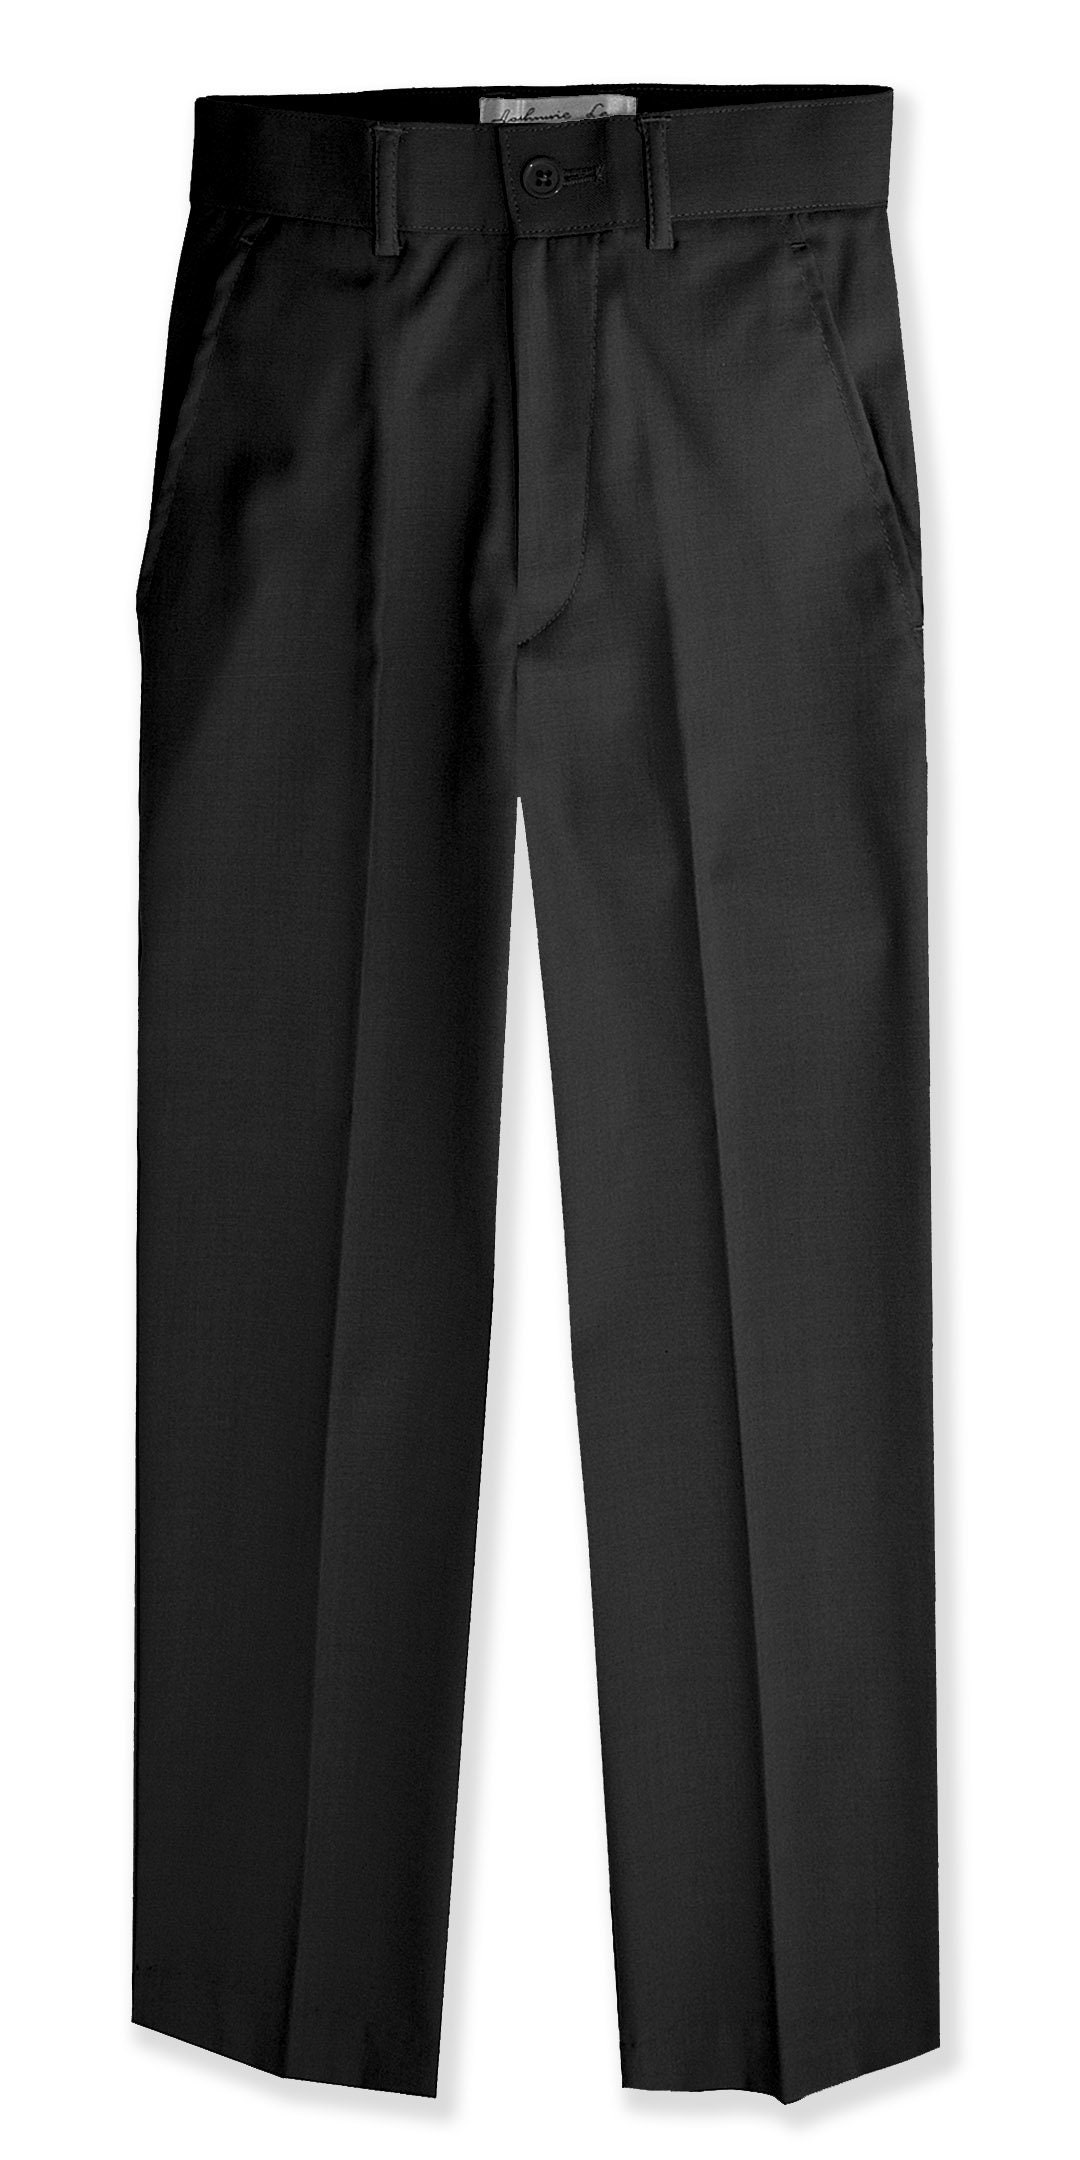 Boy Black Dress Black Pants Watch Stock Photo 718026724  Shutterstock